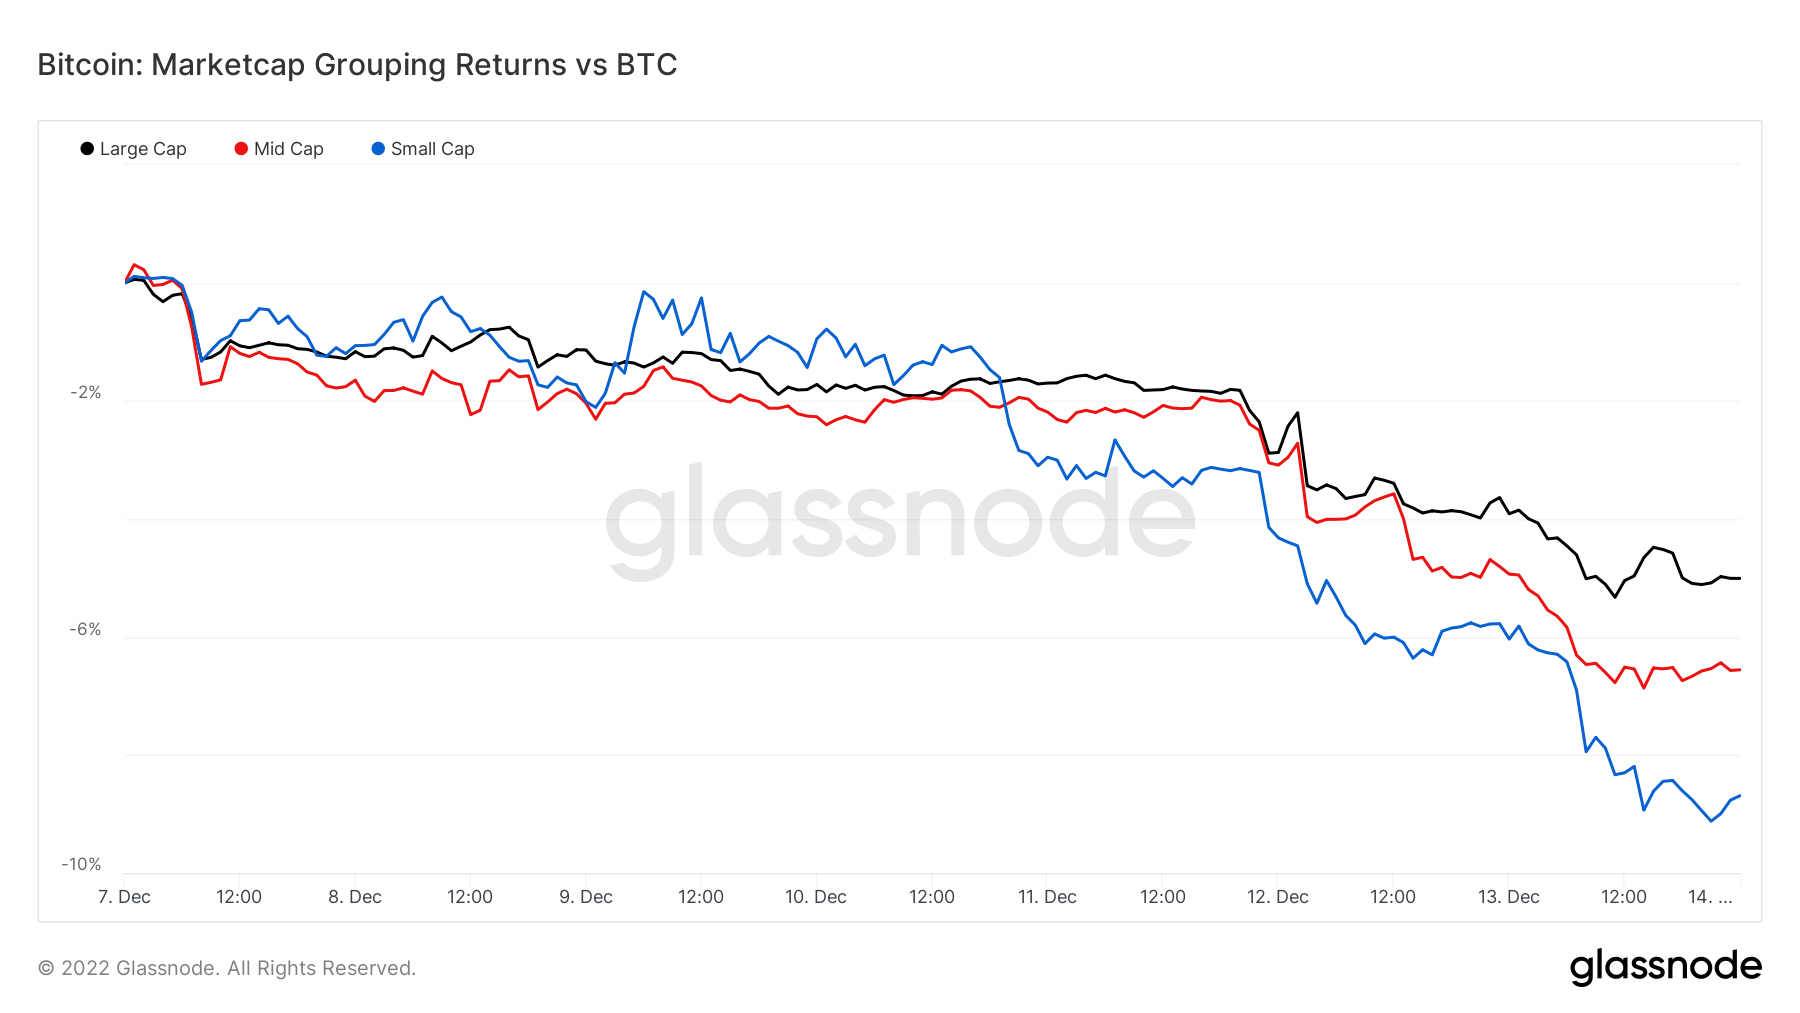 Market cap groupings returns vs. Bitcoin